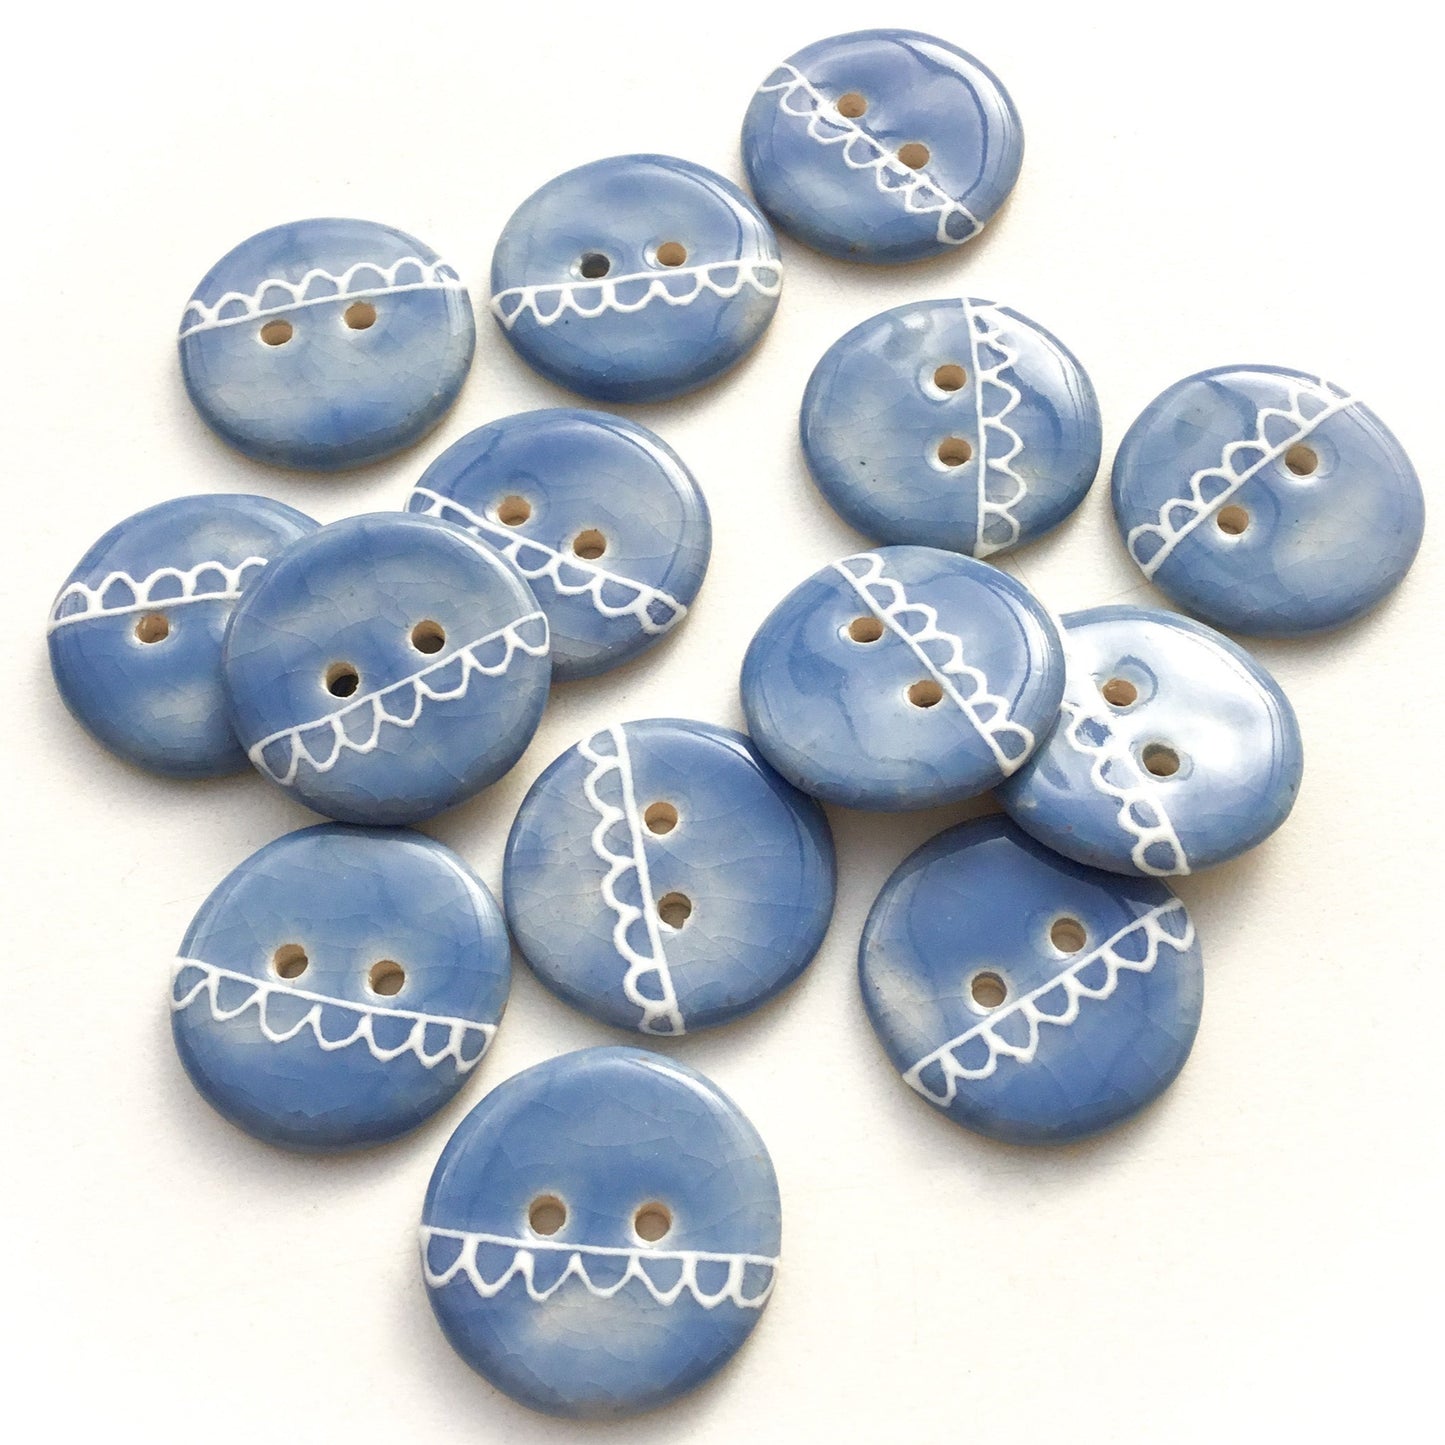 Cloudy Blues & Lace Ceramic Buttons - 7/8"